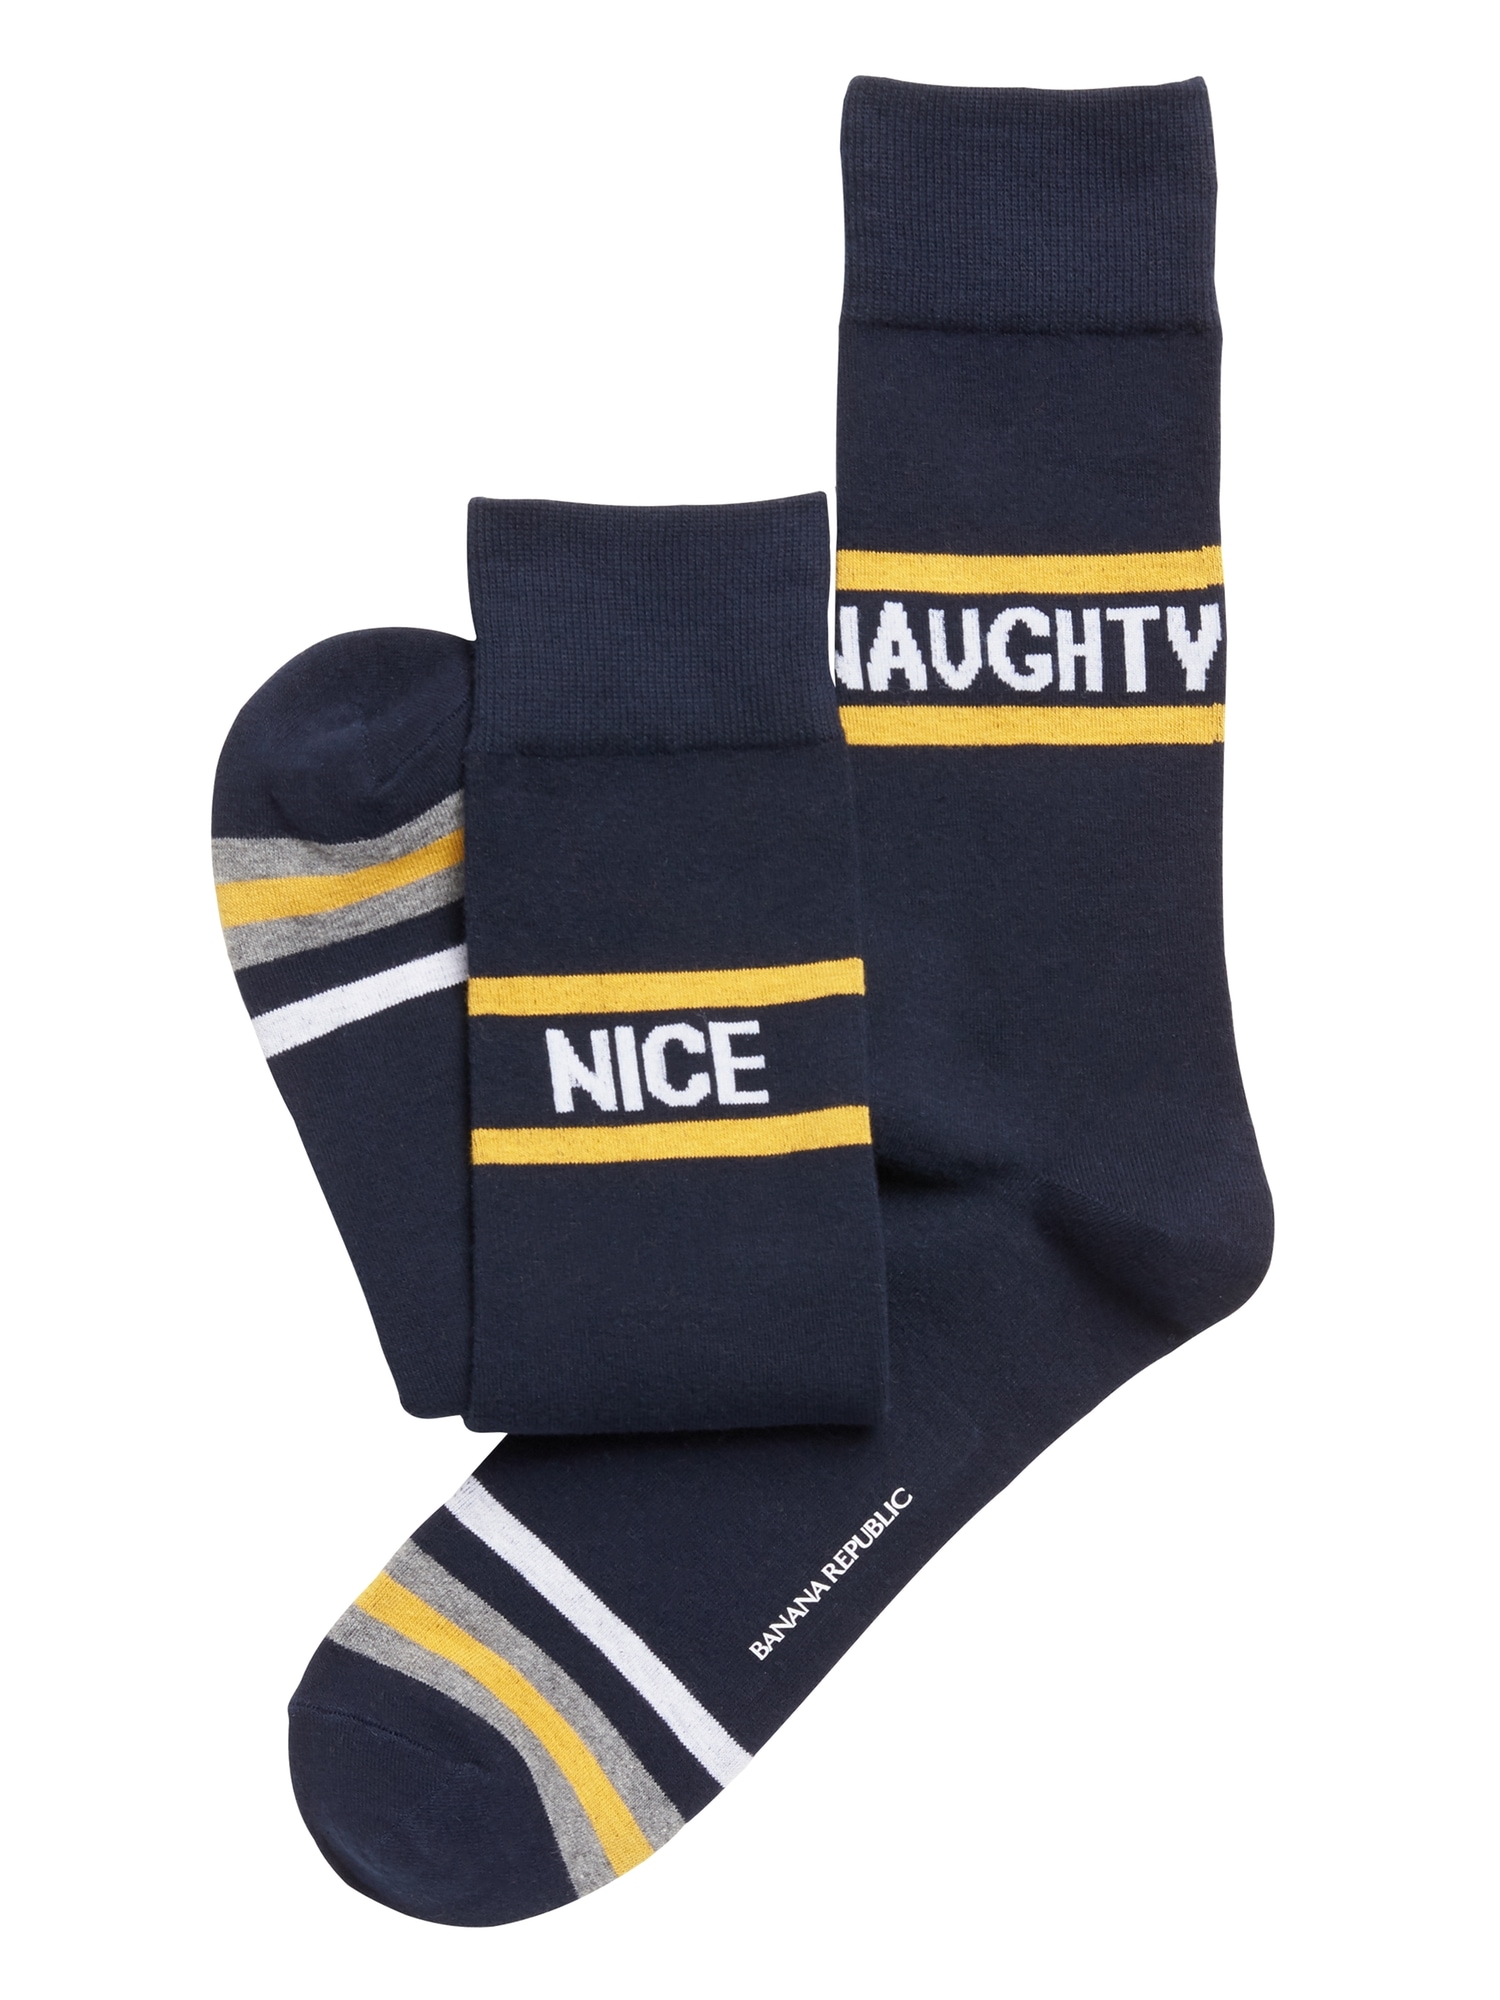 Naughty & Nice Sock